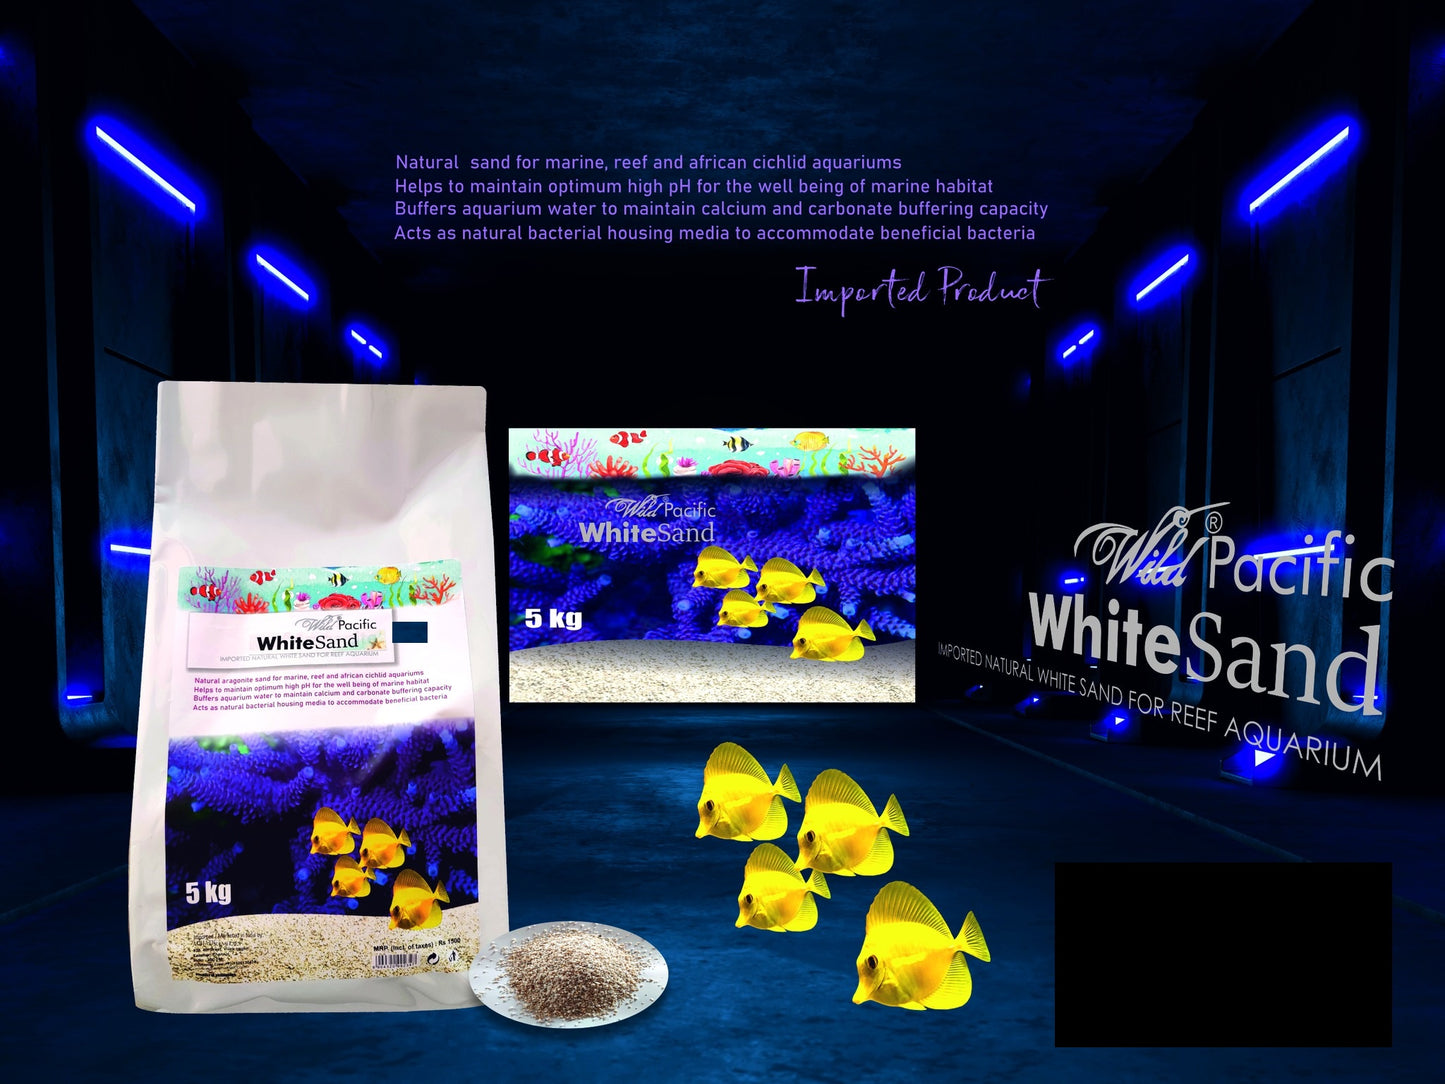 Aquatic Remedies Wild Pacific White Sand, 5 Kg | Imported Natural White Sand For Reef Aquarium